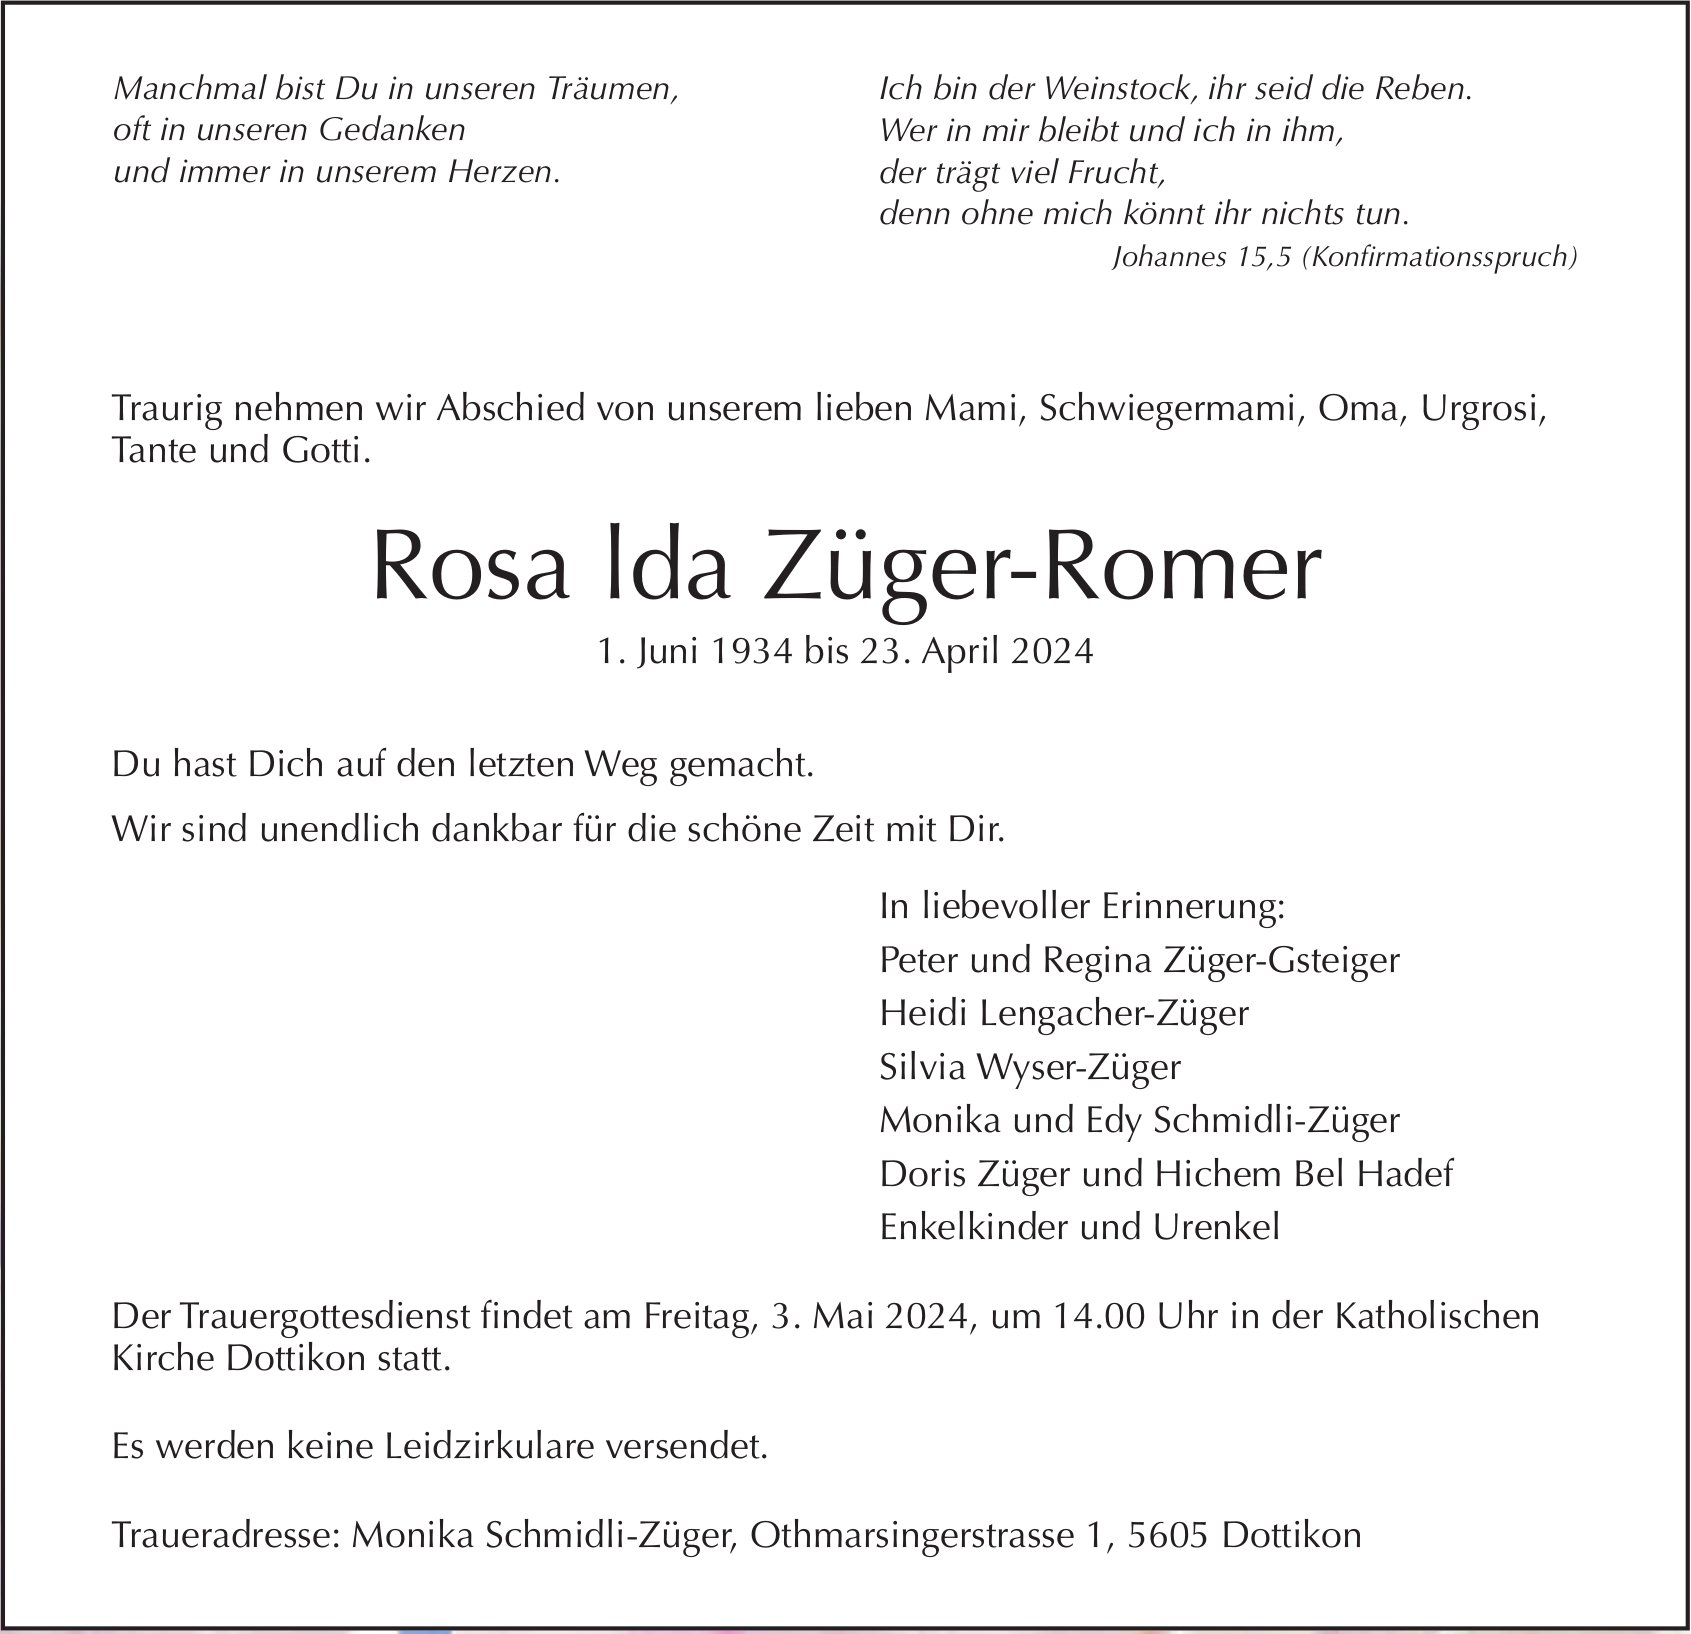 Rosa lda Züger-Romer, April 2024 / TA